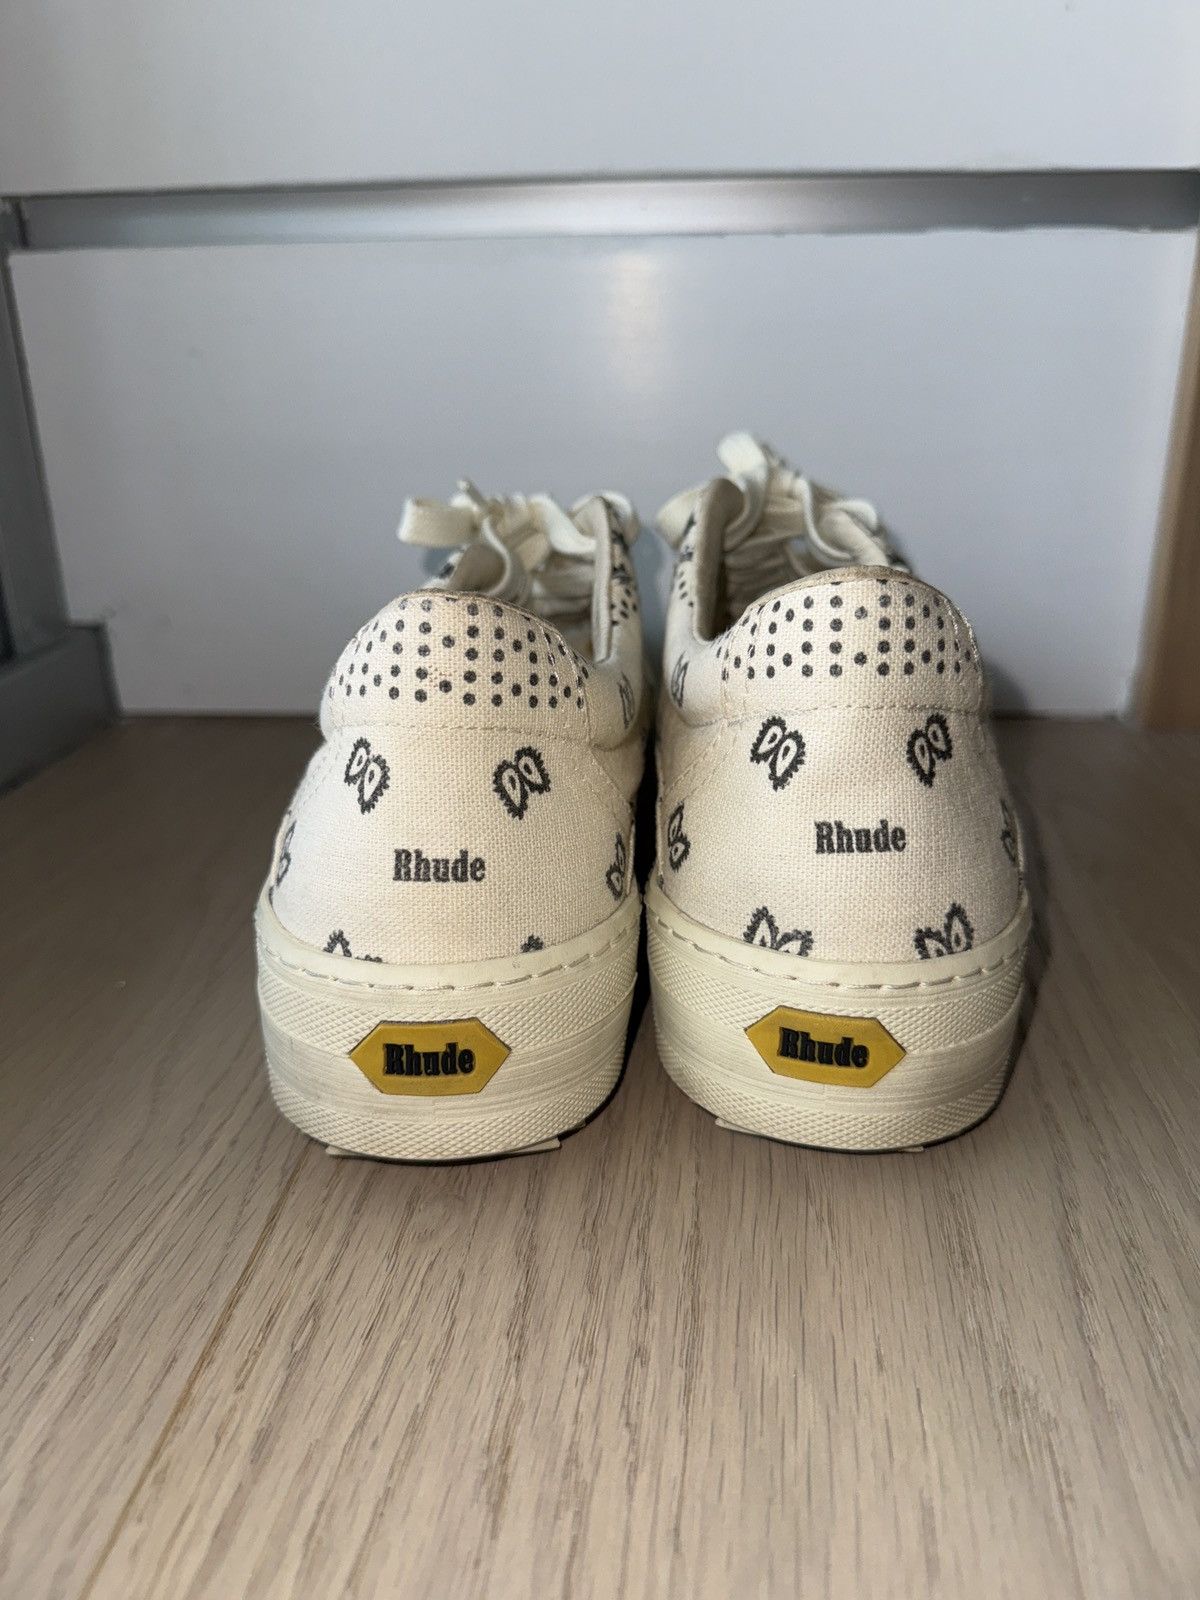 Rhude Rhude V2 Bandana Sneakers | Grailed